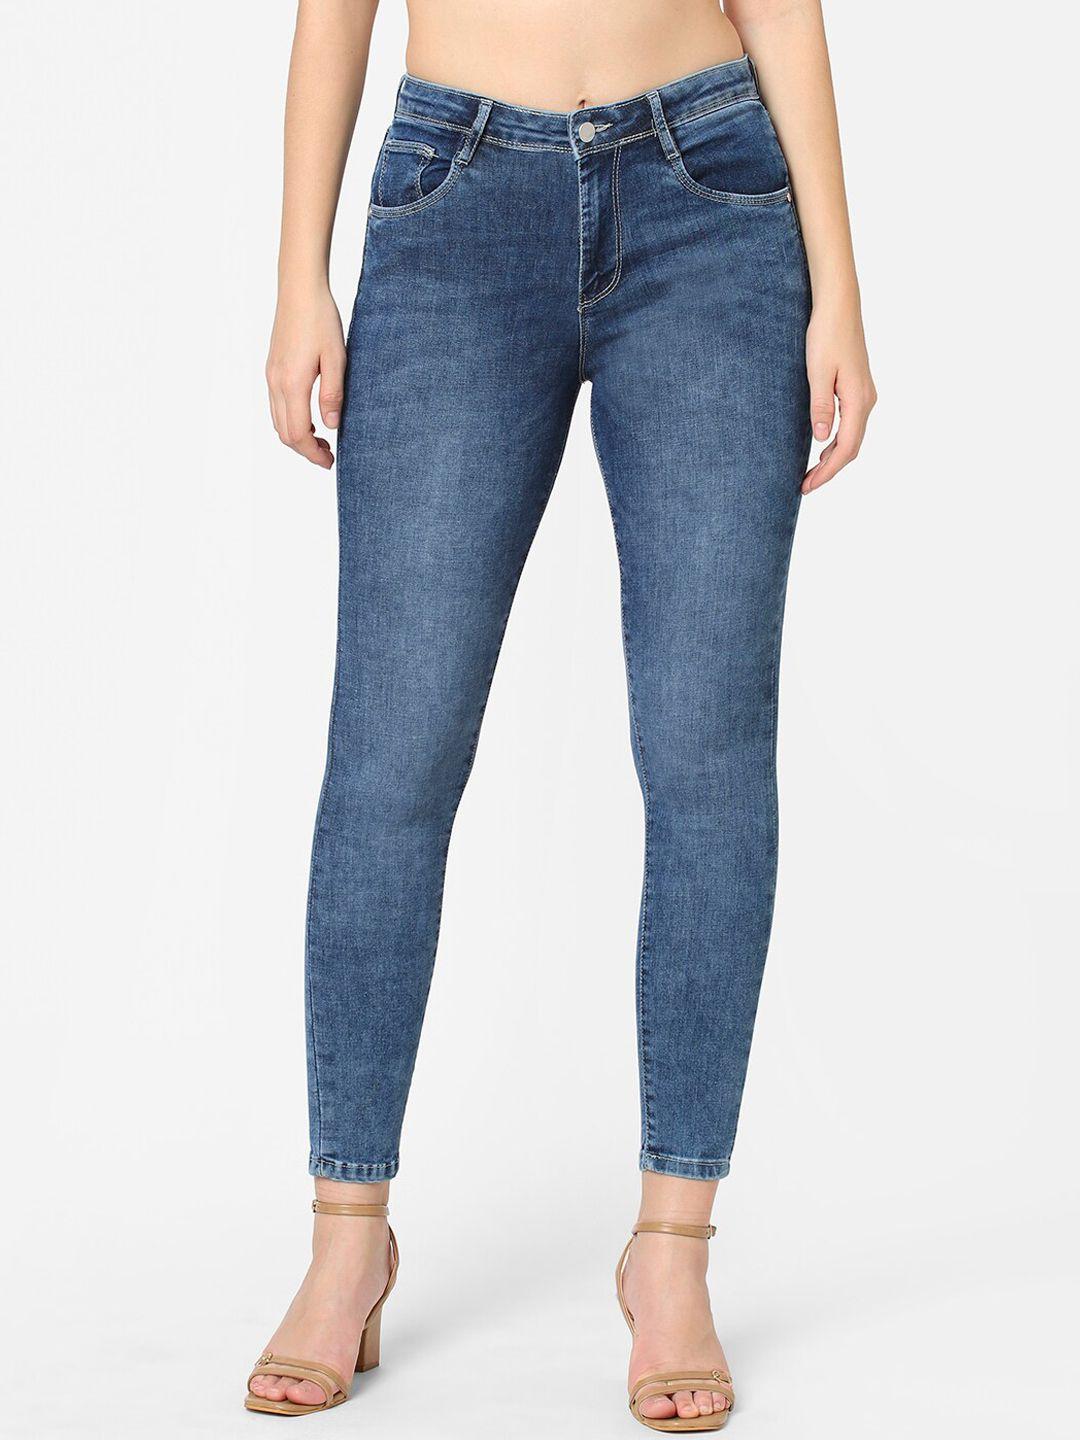 kraus-jeans-women-blue-skinny-fit-high-rise-light-fade-jeans